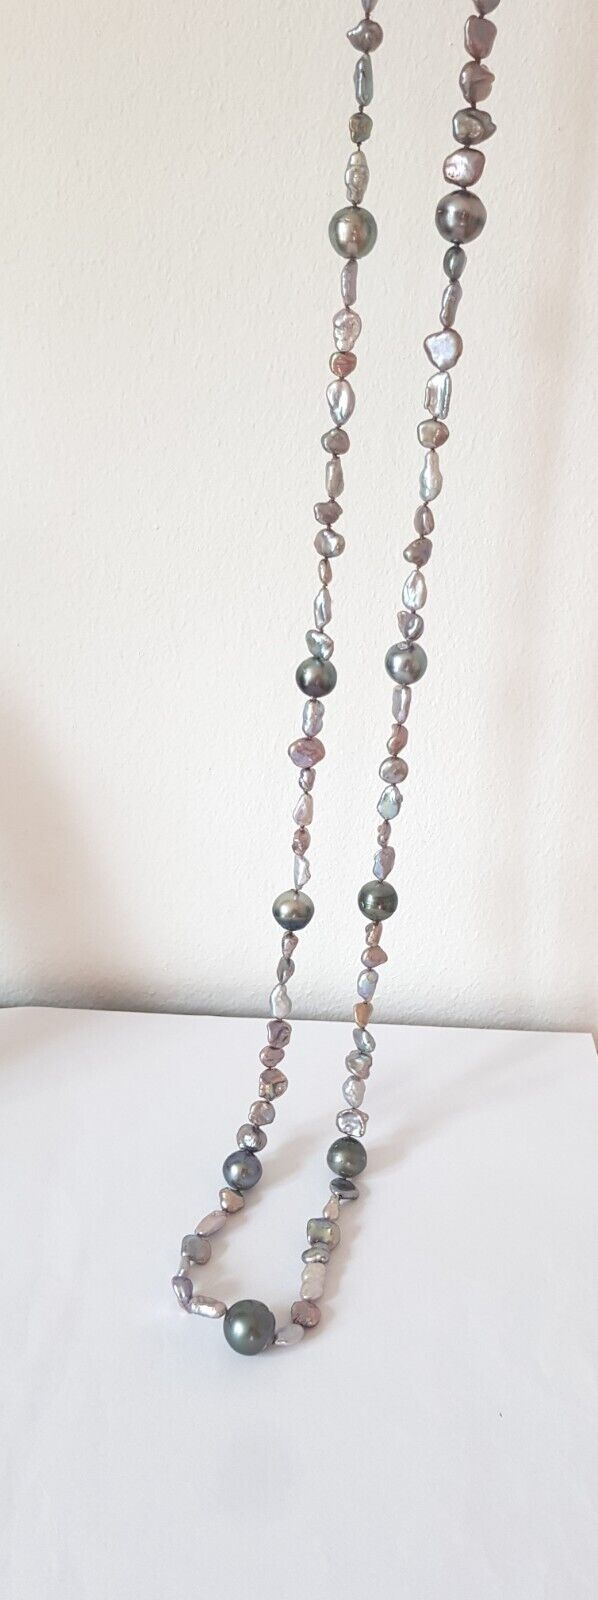 Grosse Tahiti Perlen mit Keshi Perlen Kette wunderschön 100 cm Länge